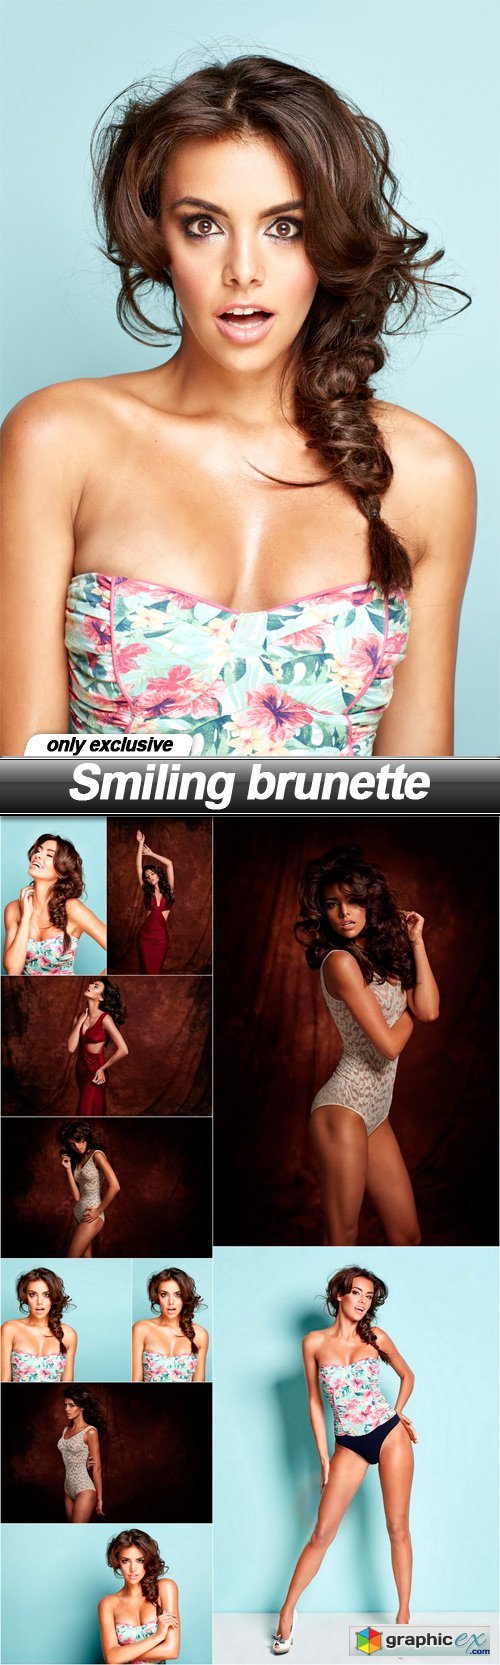 Smiling brunette - 10 UHQ JPEG